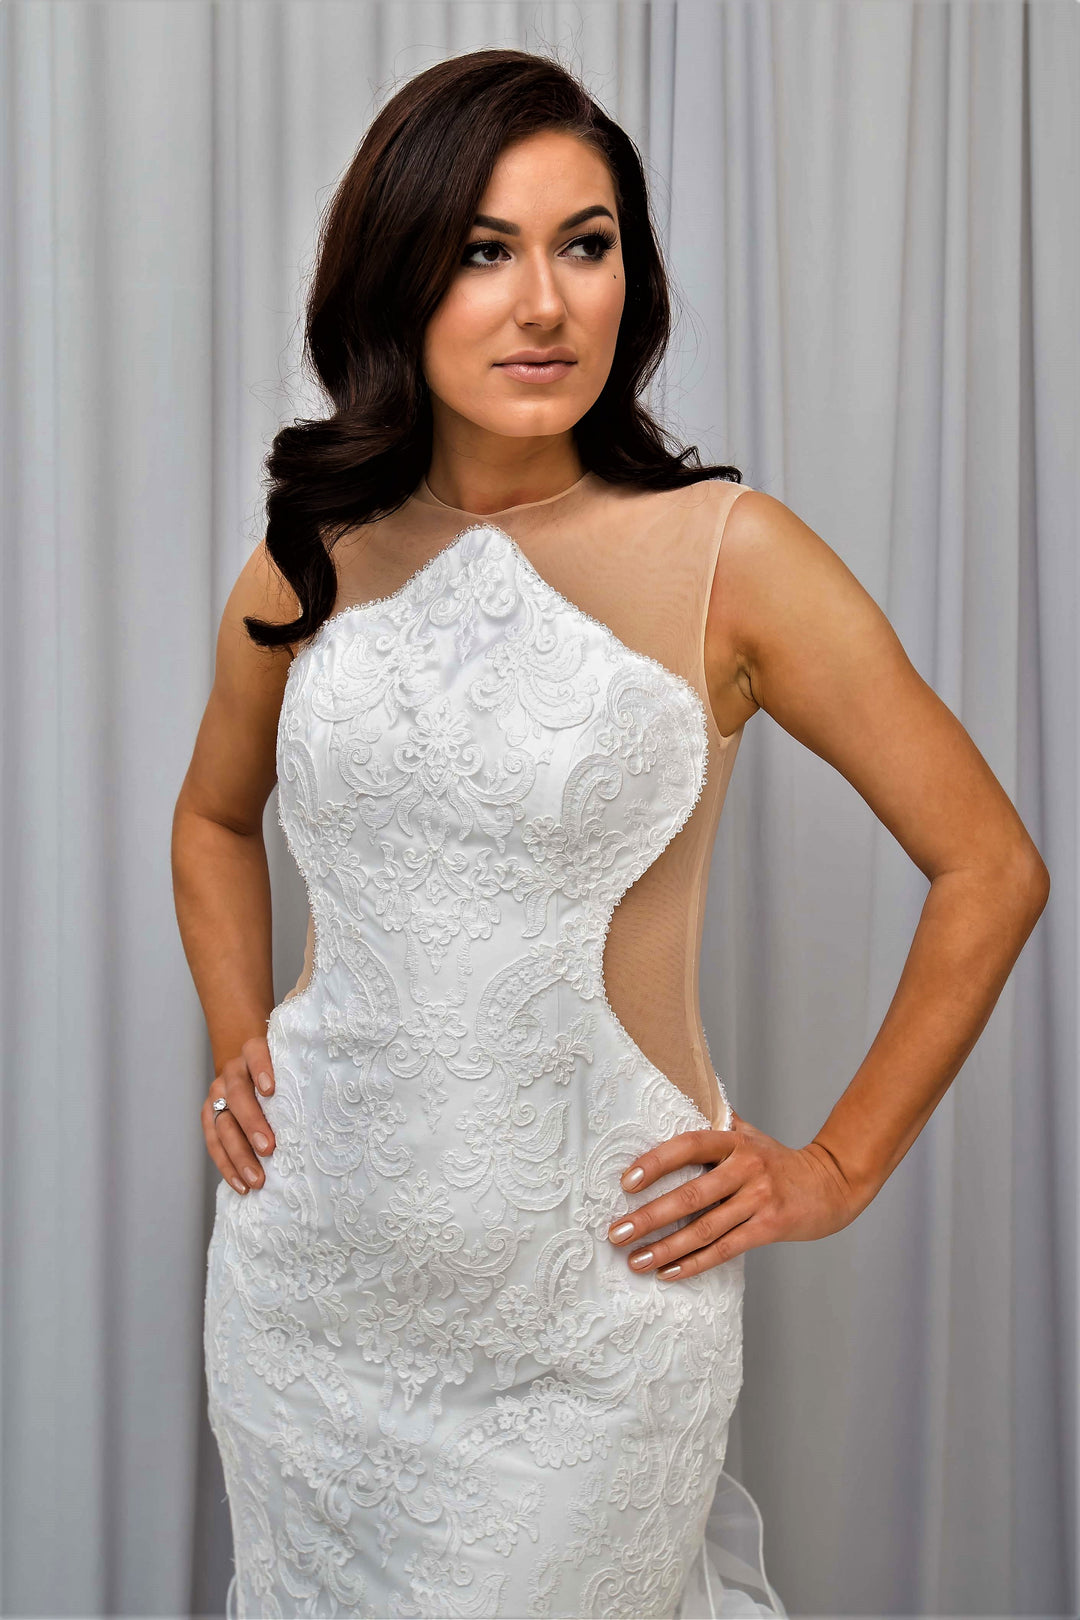 ILLUSIONA Modern High-Bean Neckline Illusion Side Bodice Lace Bridal Gown